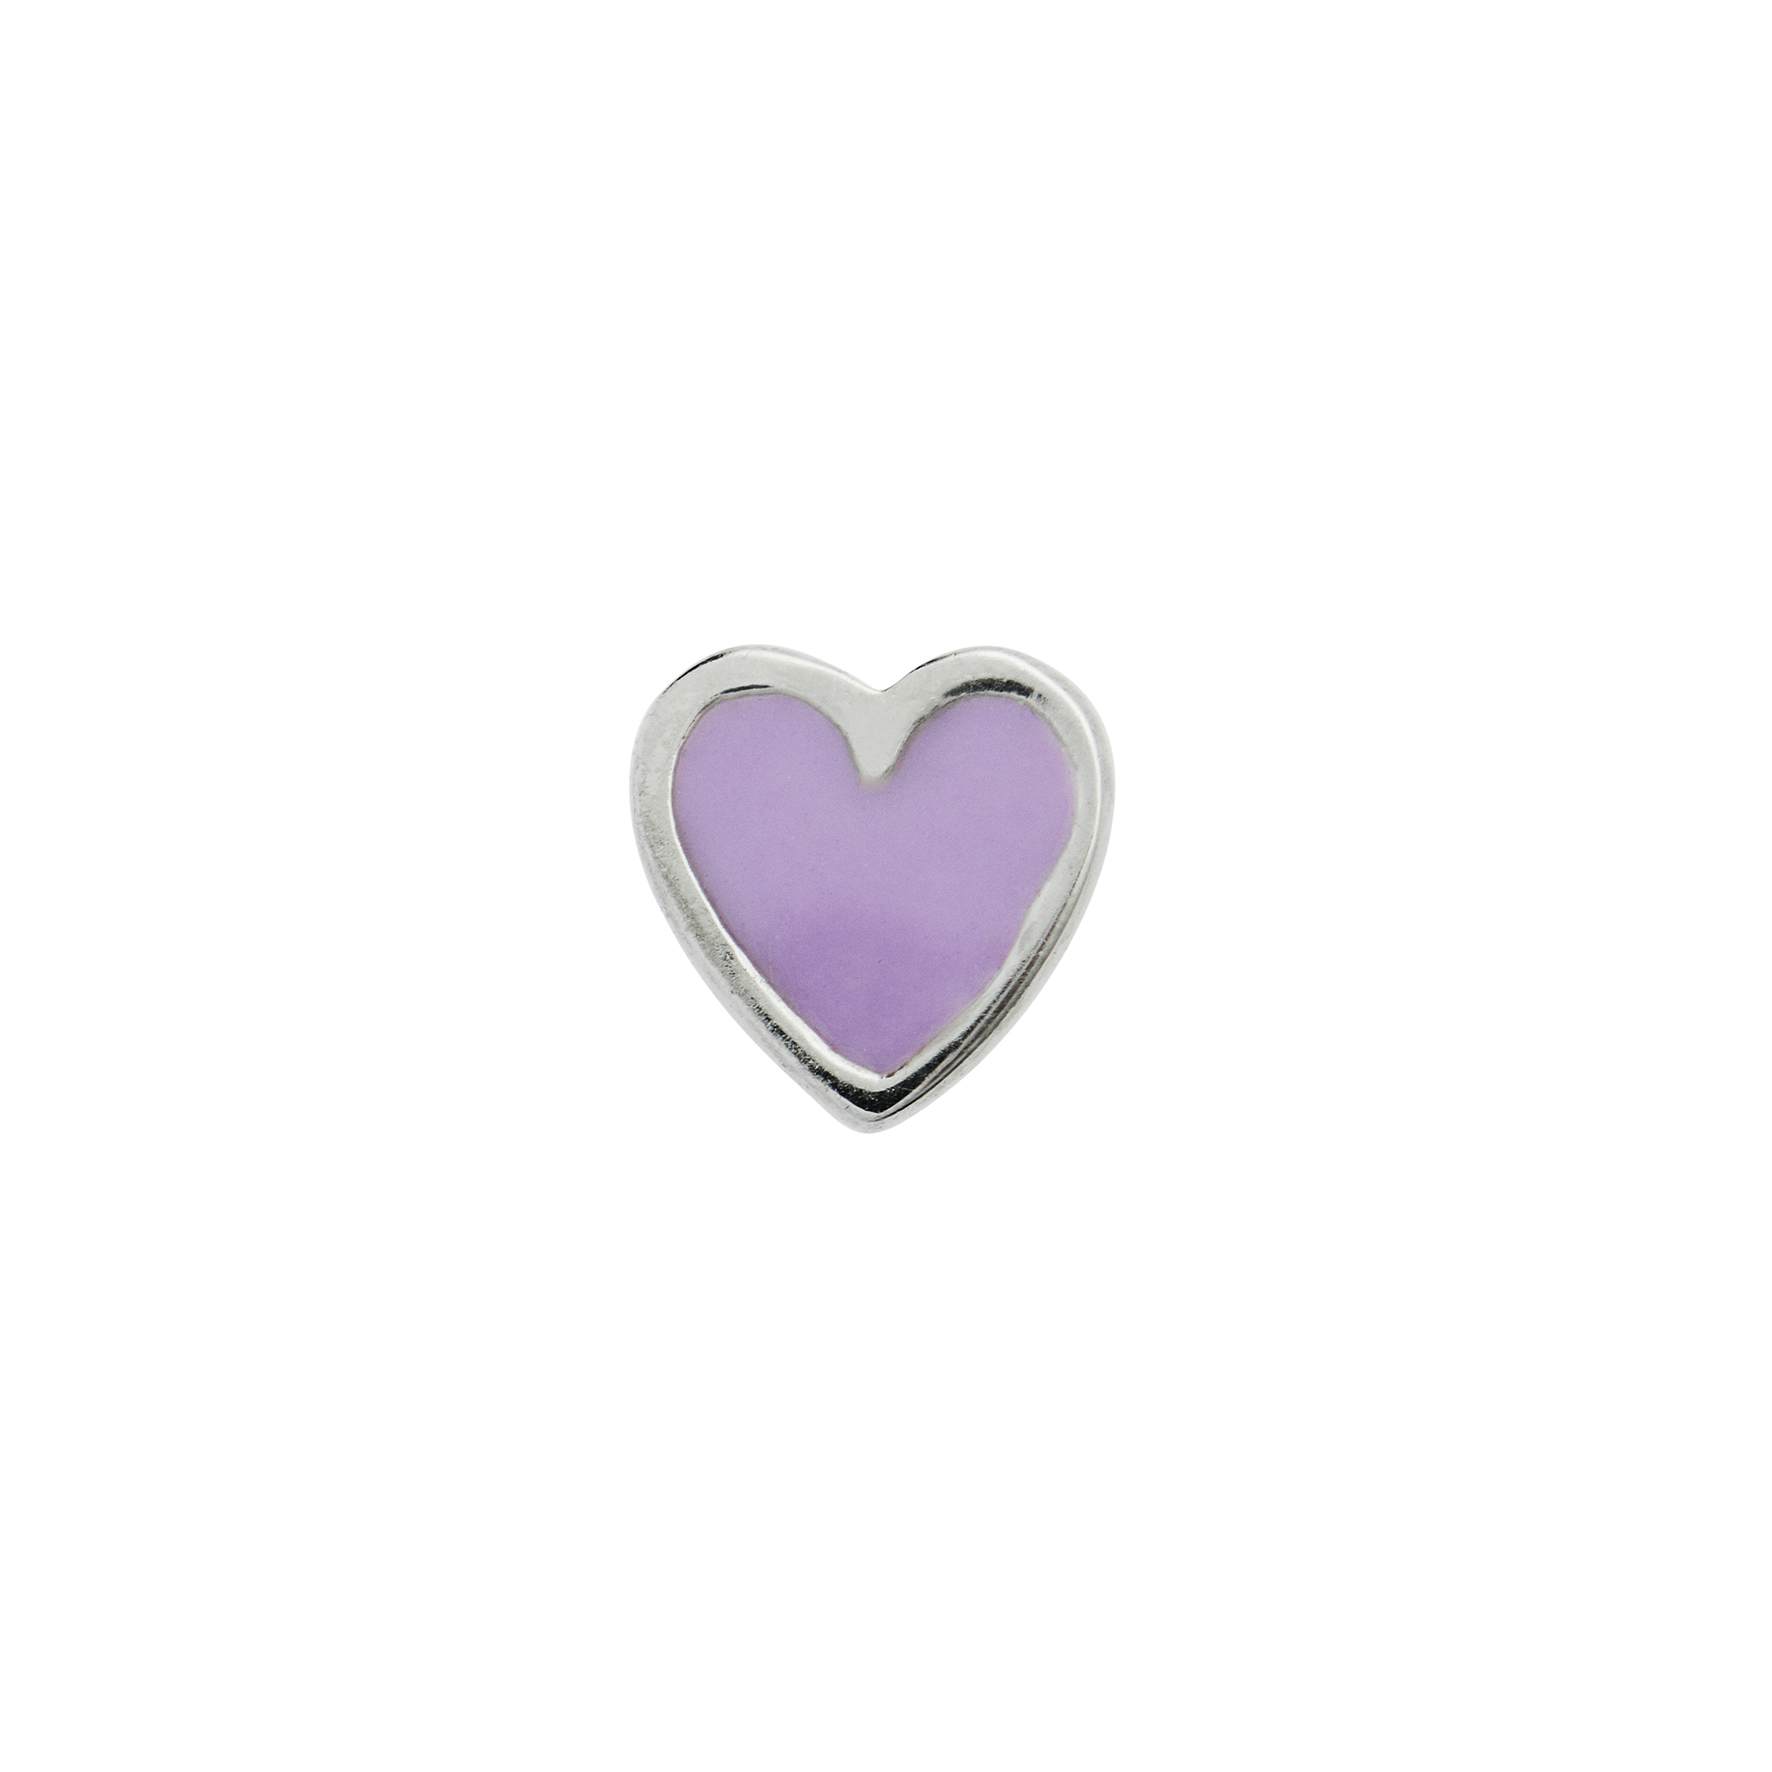 Petit Love Heart Purple Sorbet von STINE A Jewelry in Silber Sterling 925